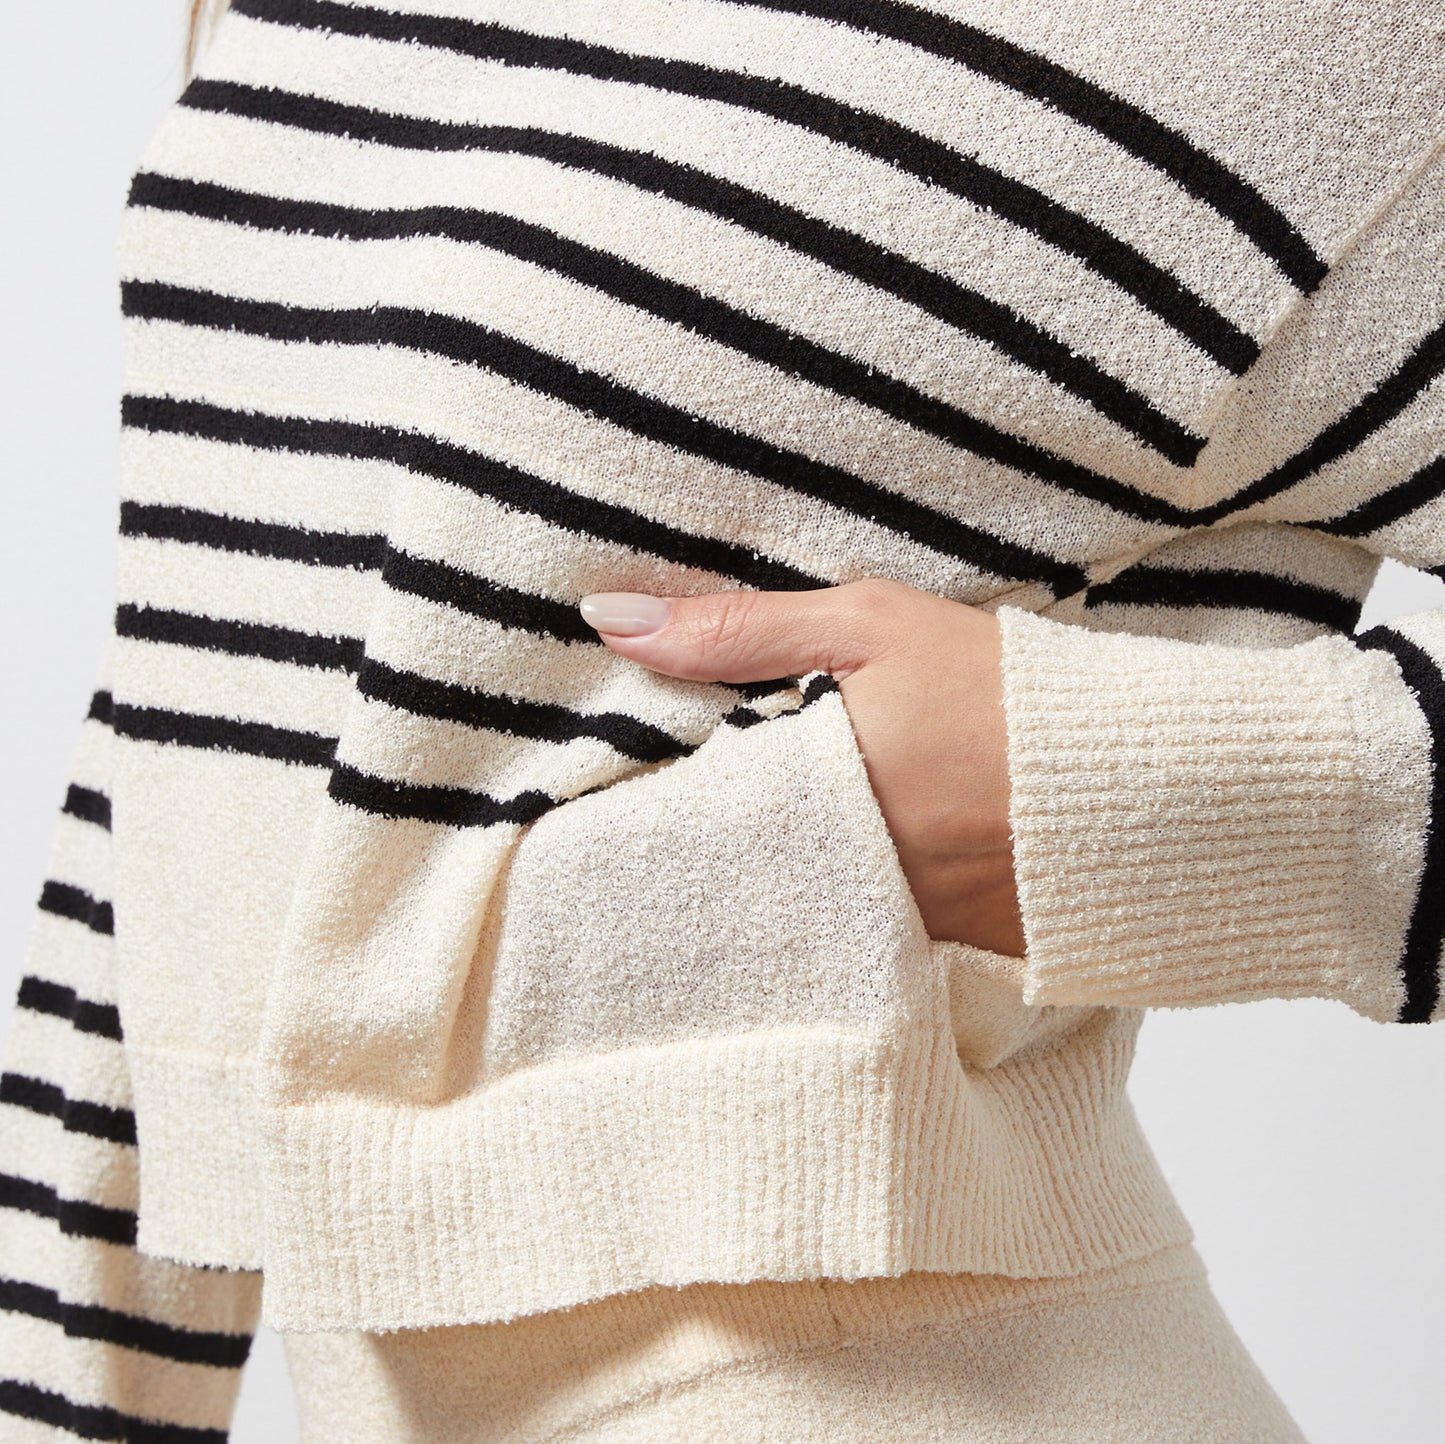 Boucle Knit Stripe Sweater